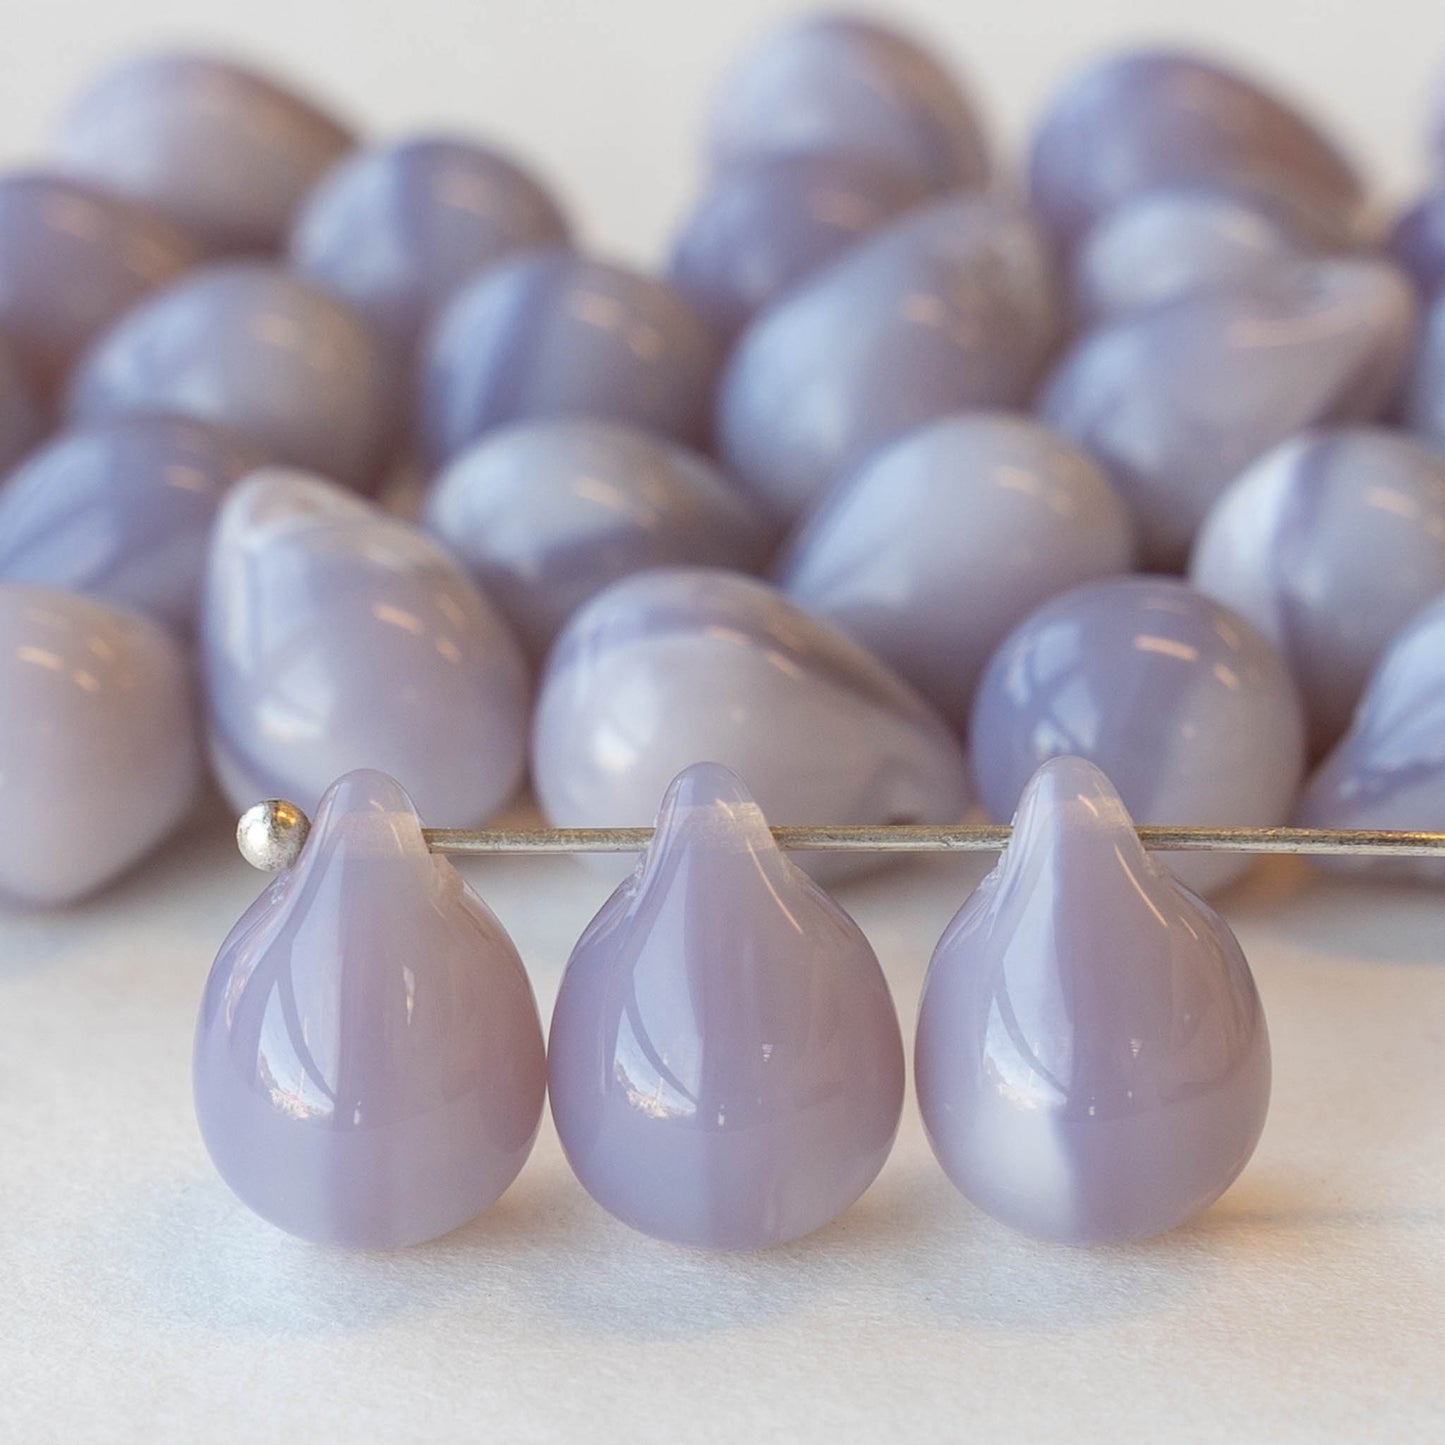 10x14mm Glass Teardrop Beads - Lavender Gray Opaline - Choose Amount